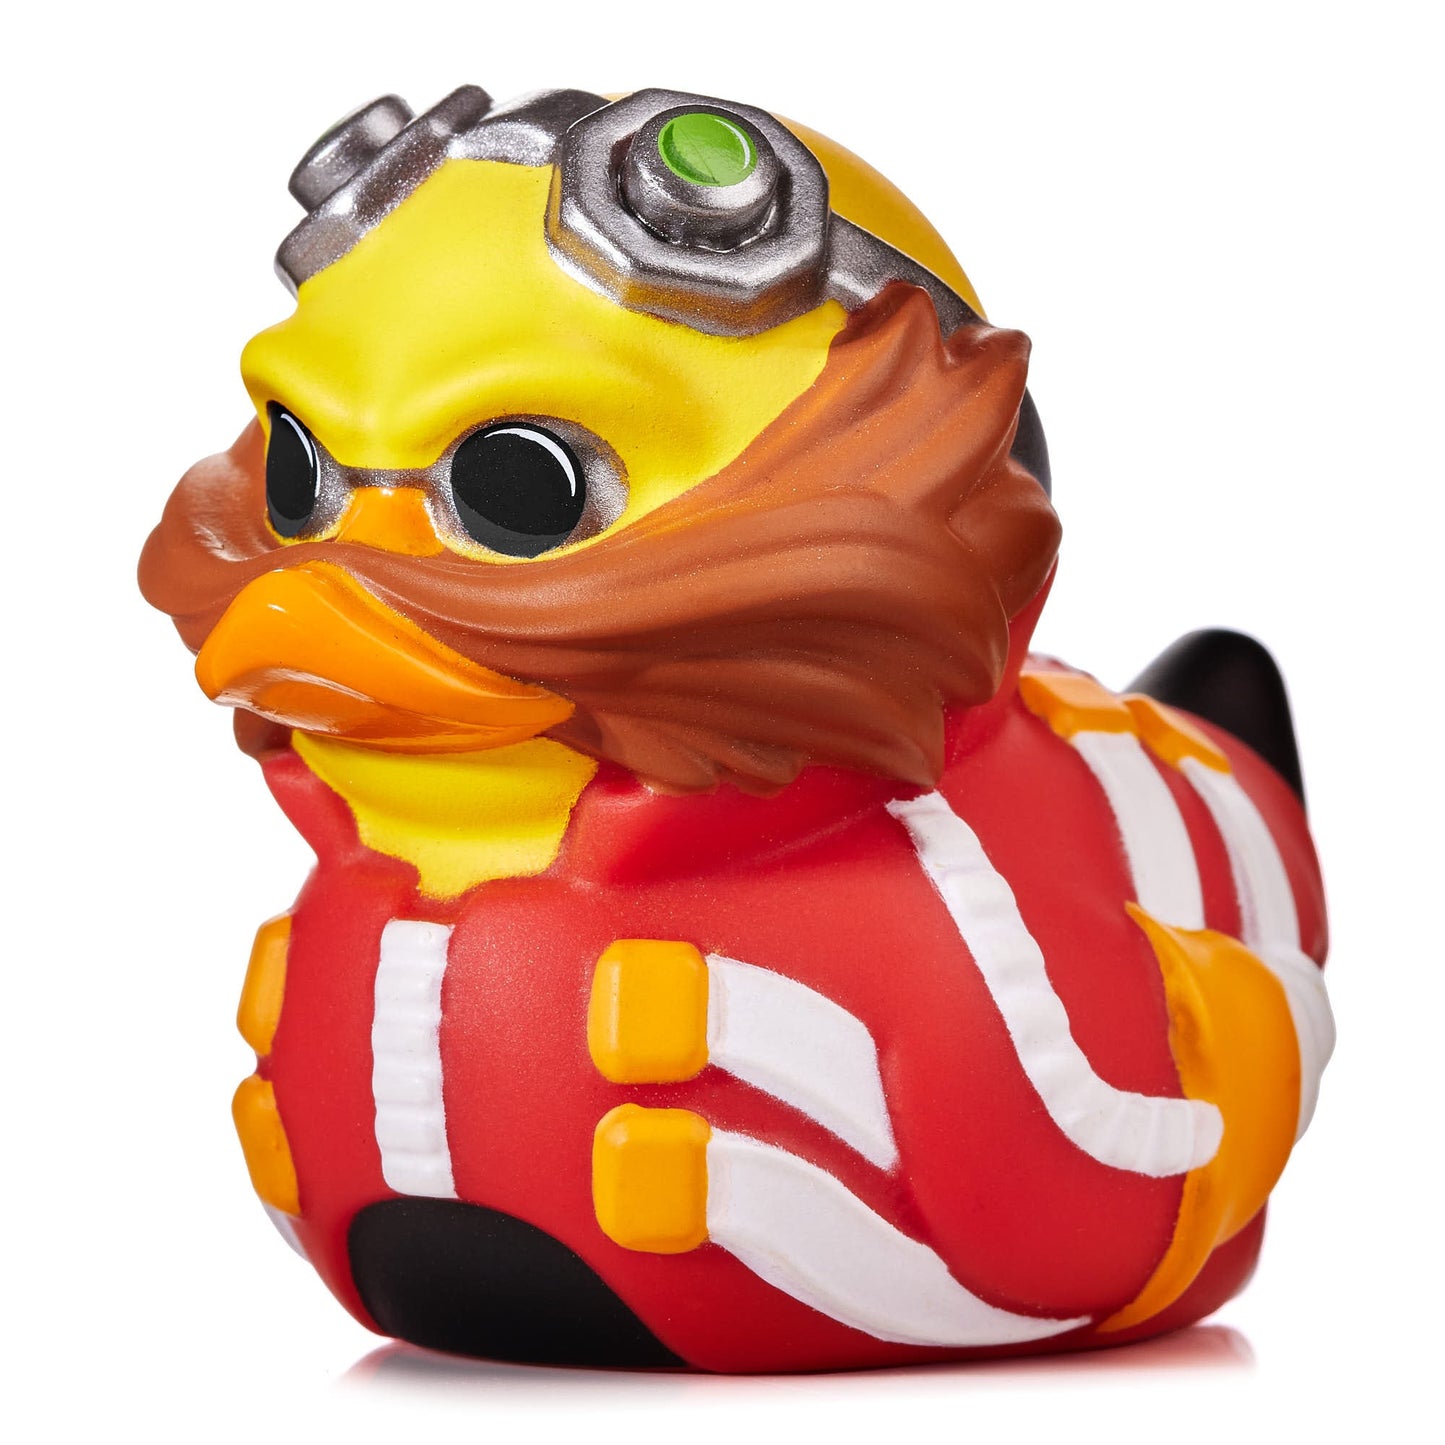 Dr. Robotnik Mini Duck